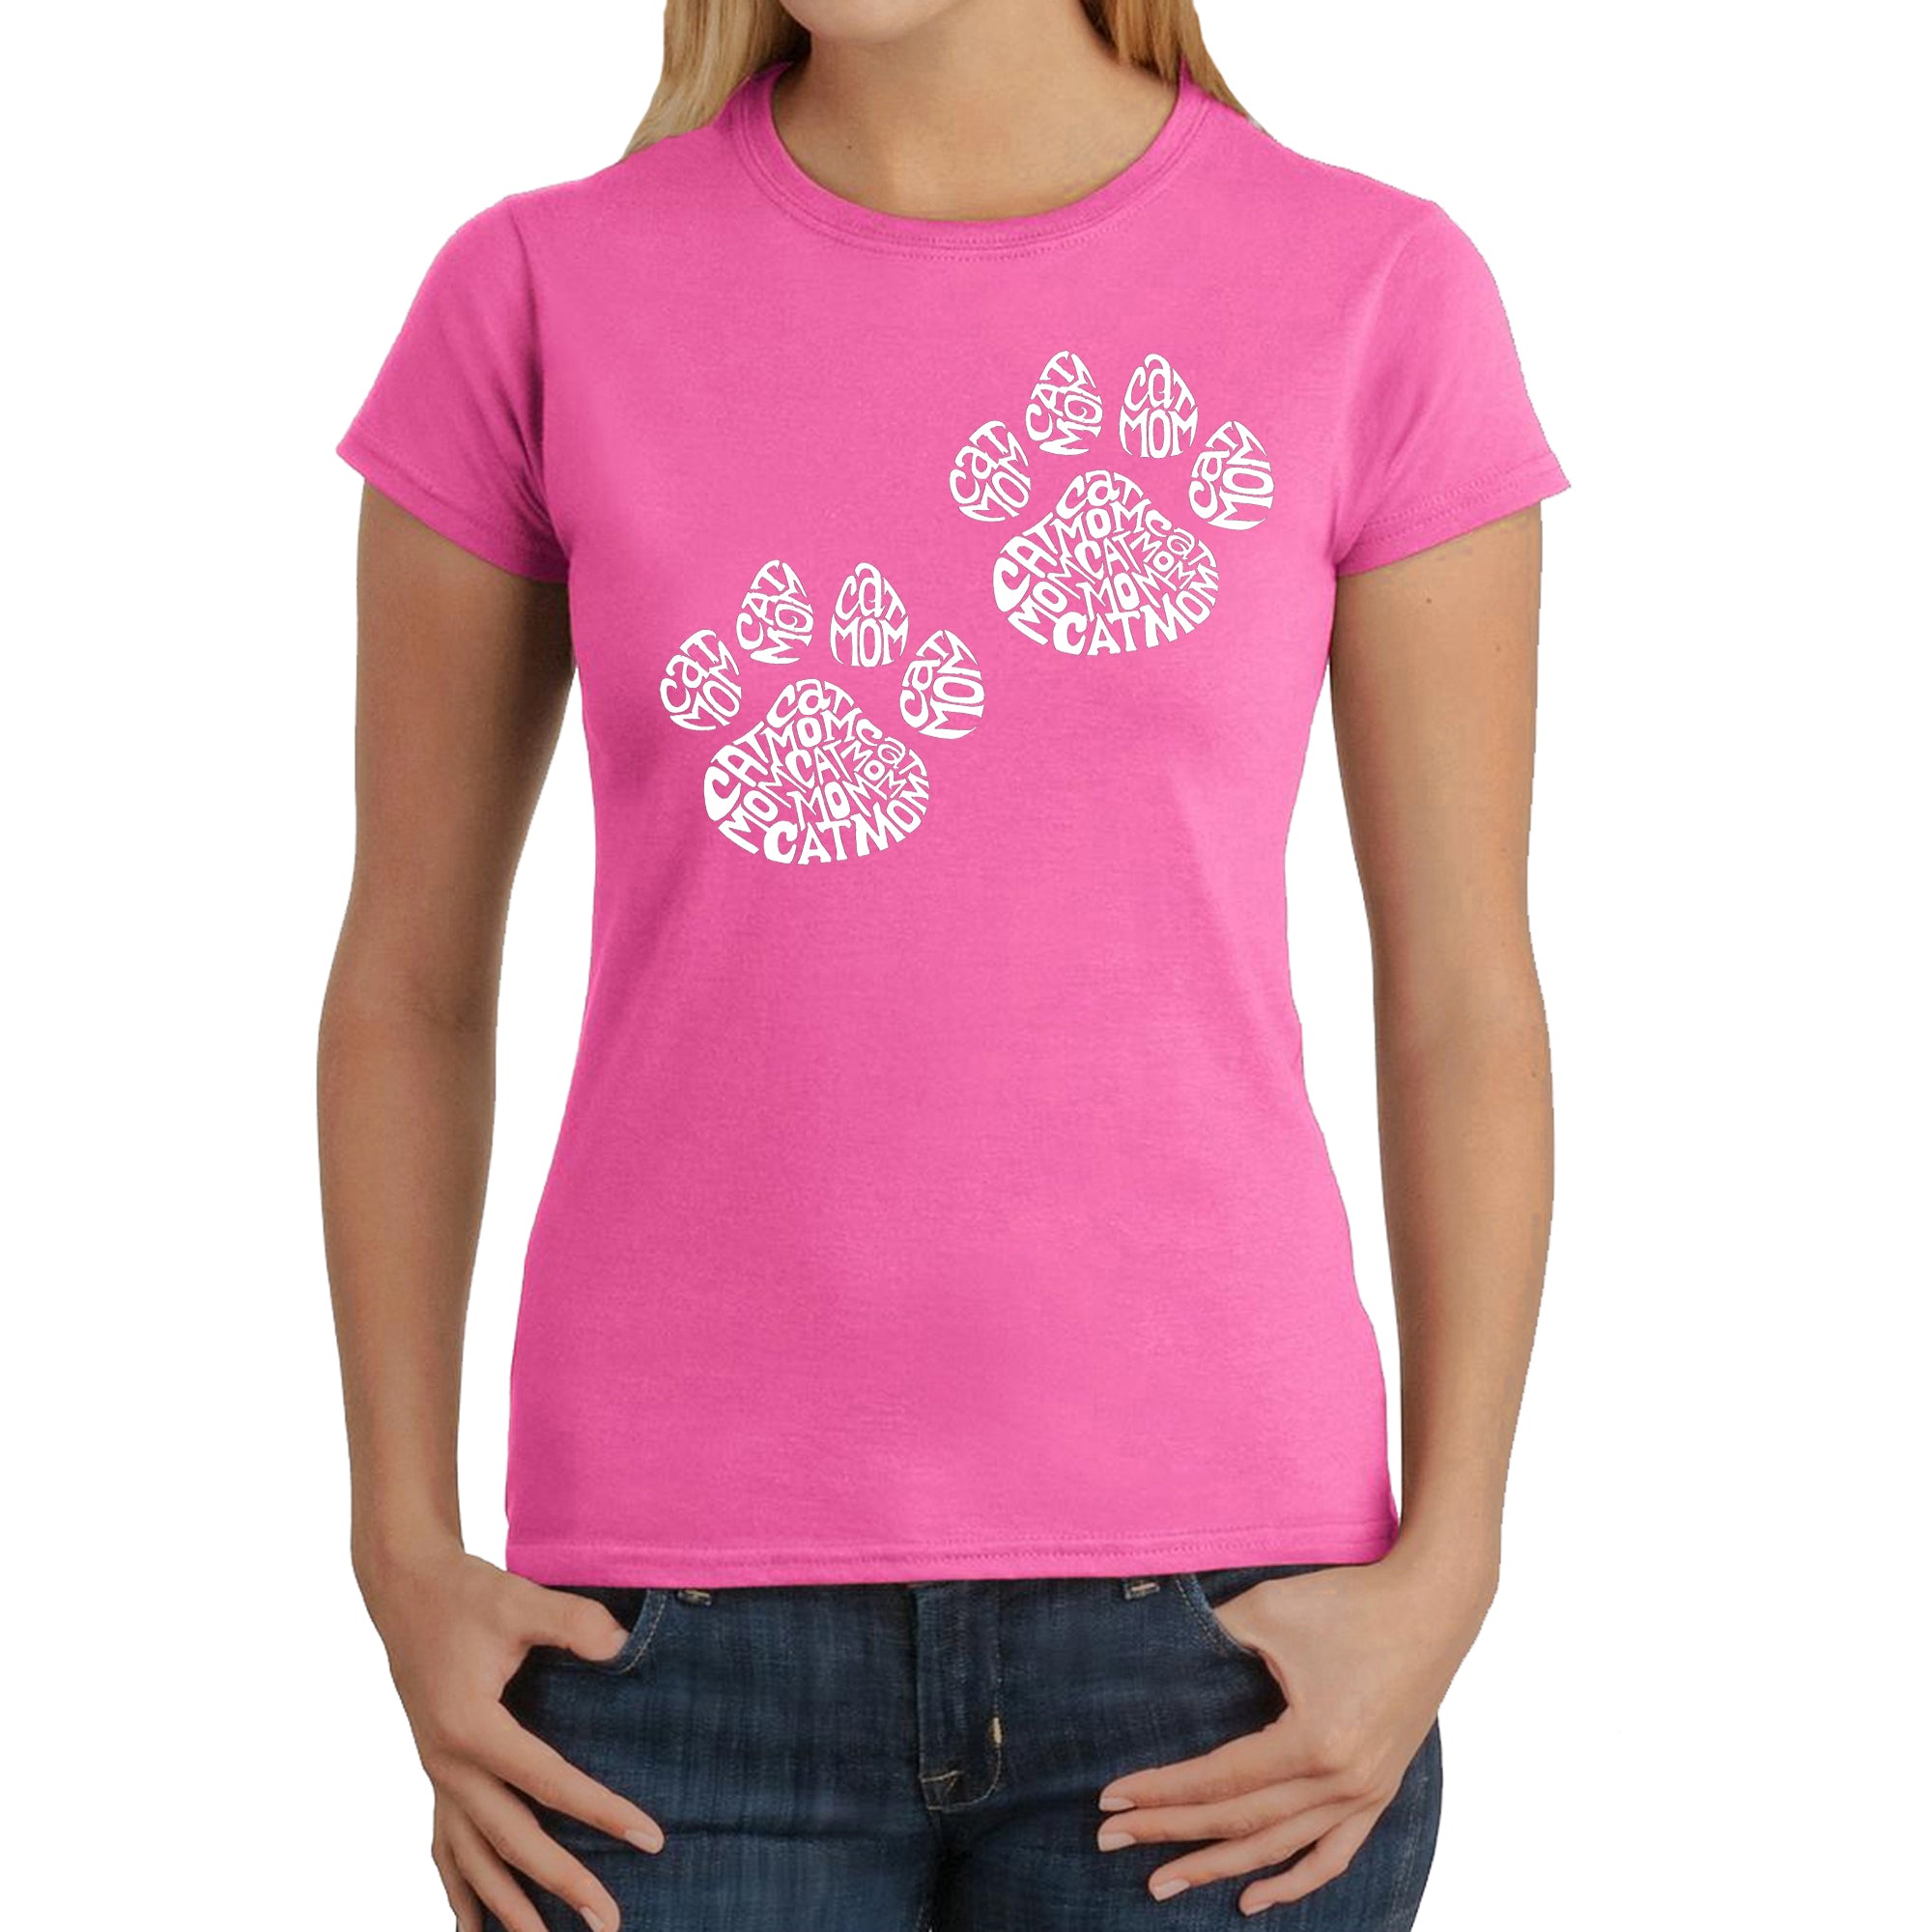 Cat Mom - Women's Word Art T-Shirt - Pink - Small